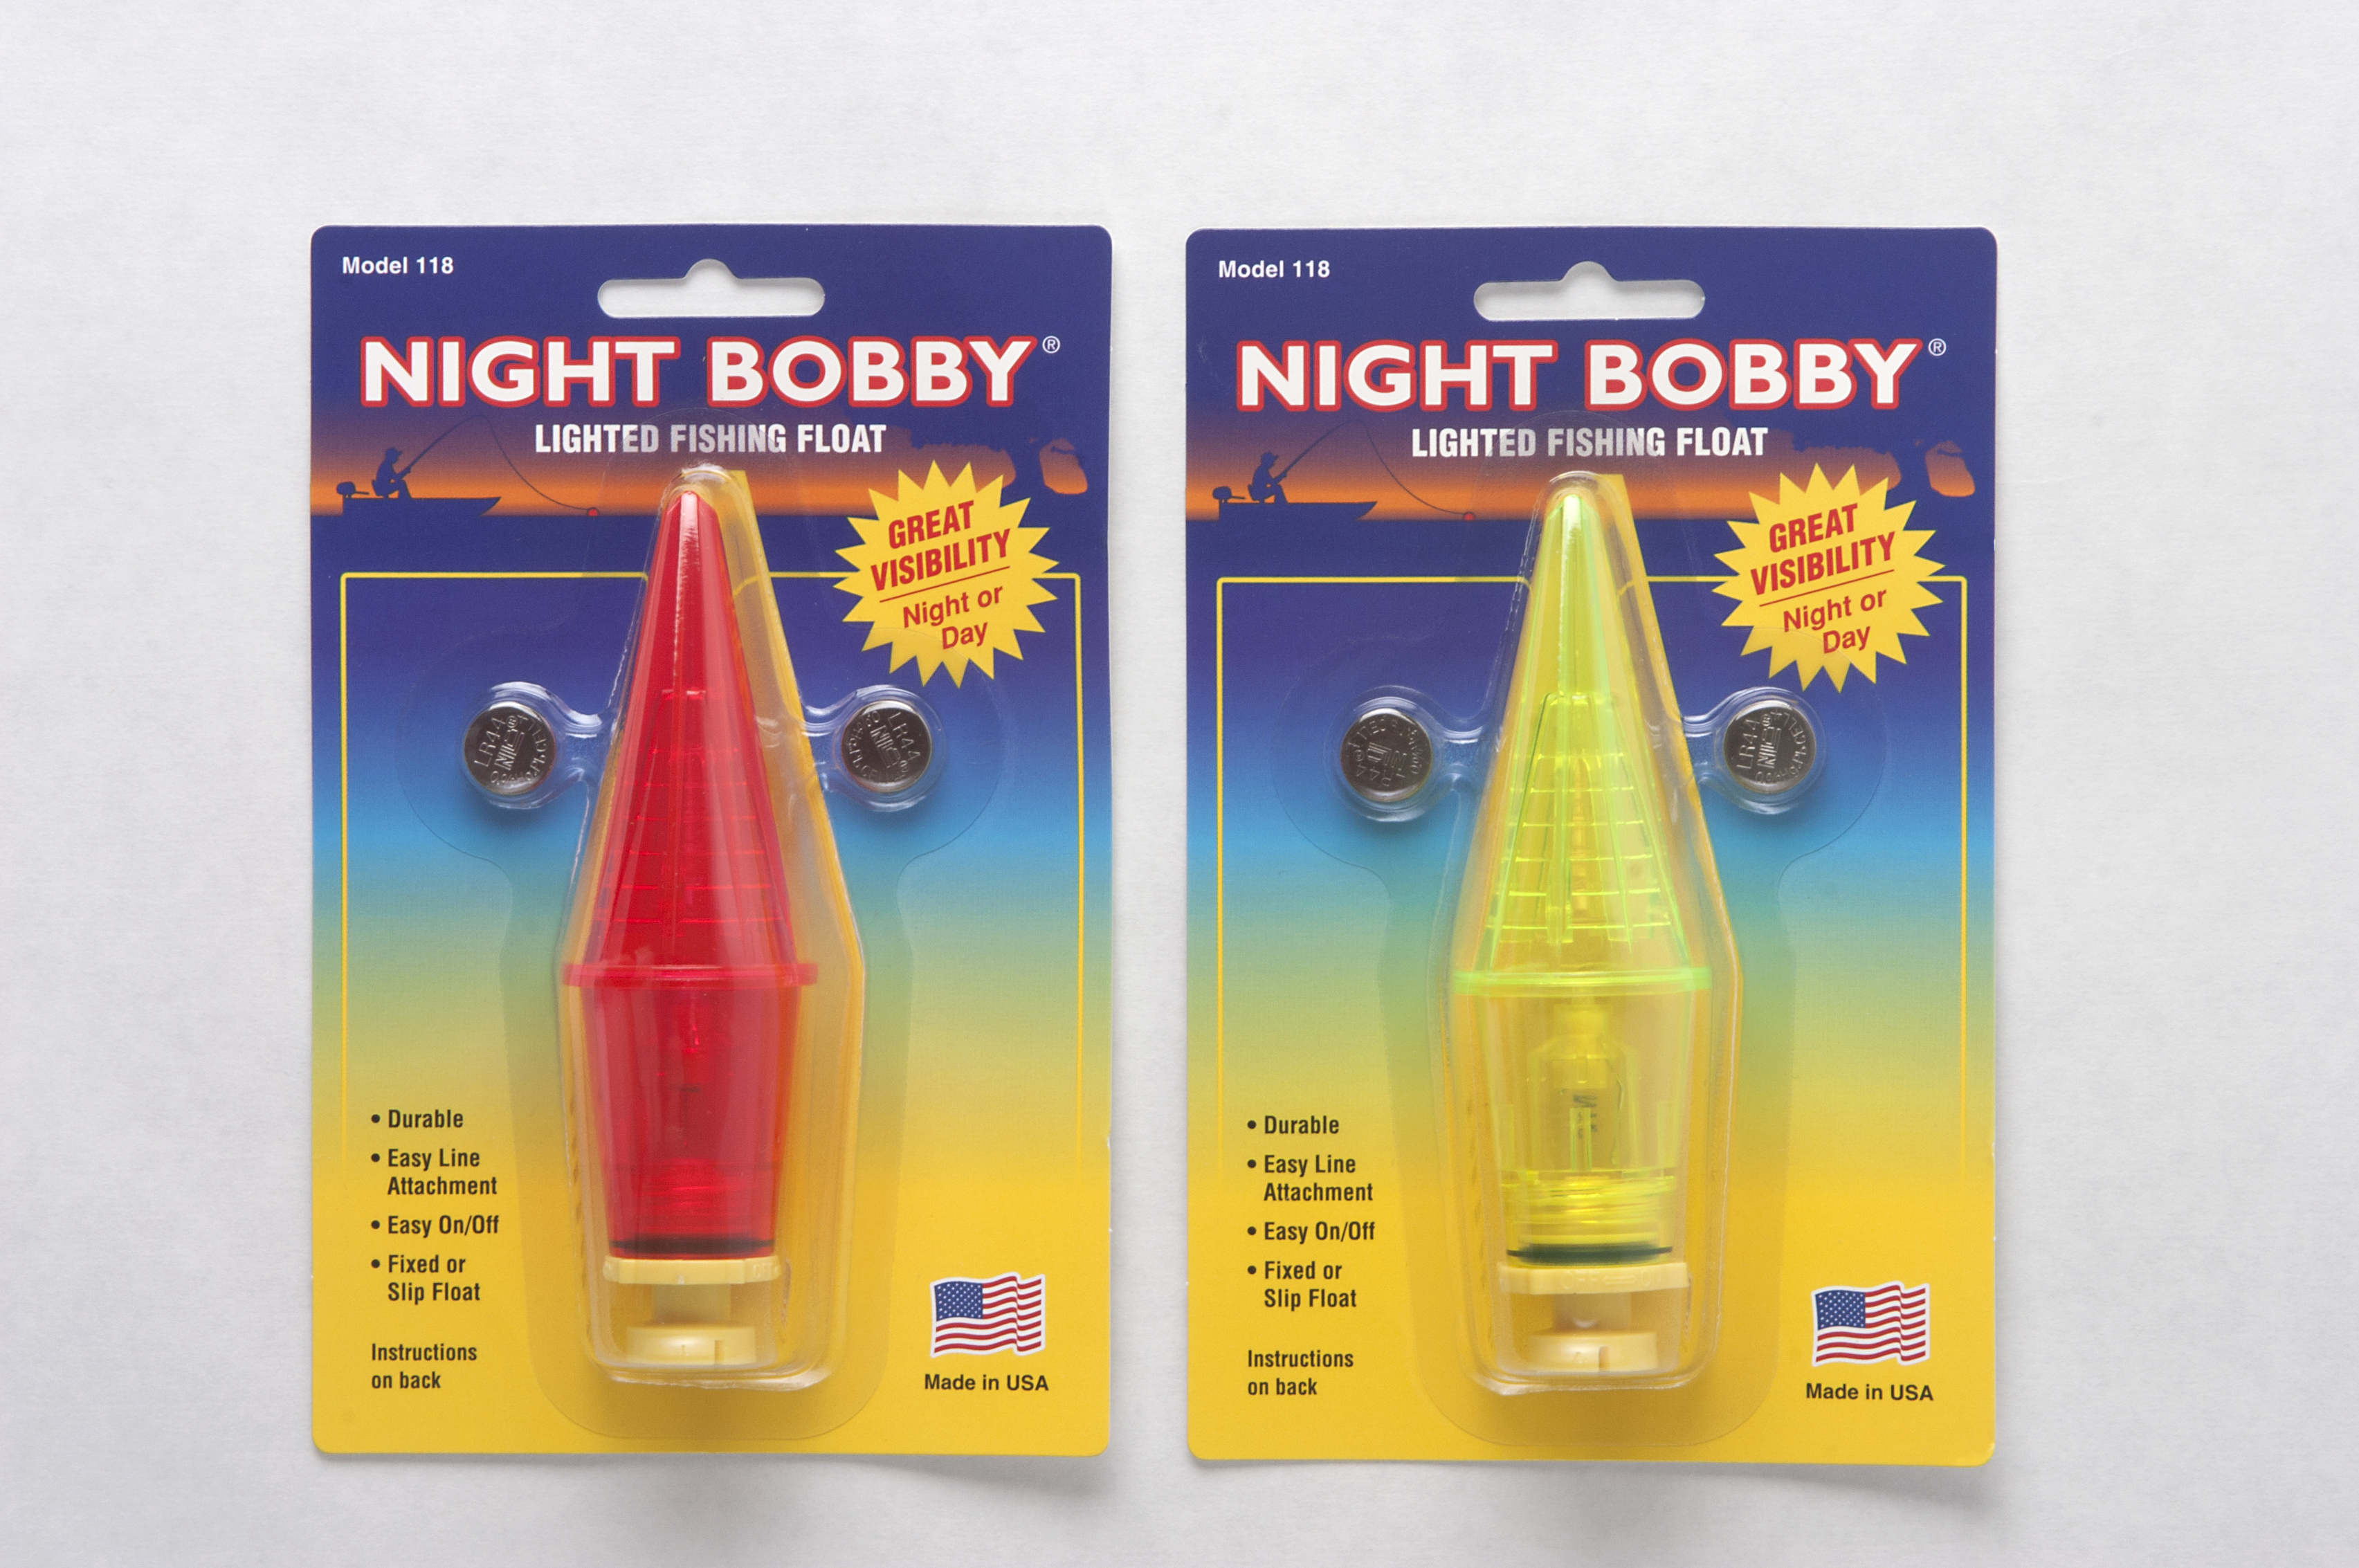 The Original Night Bobby® – 3x Brighter